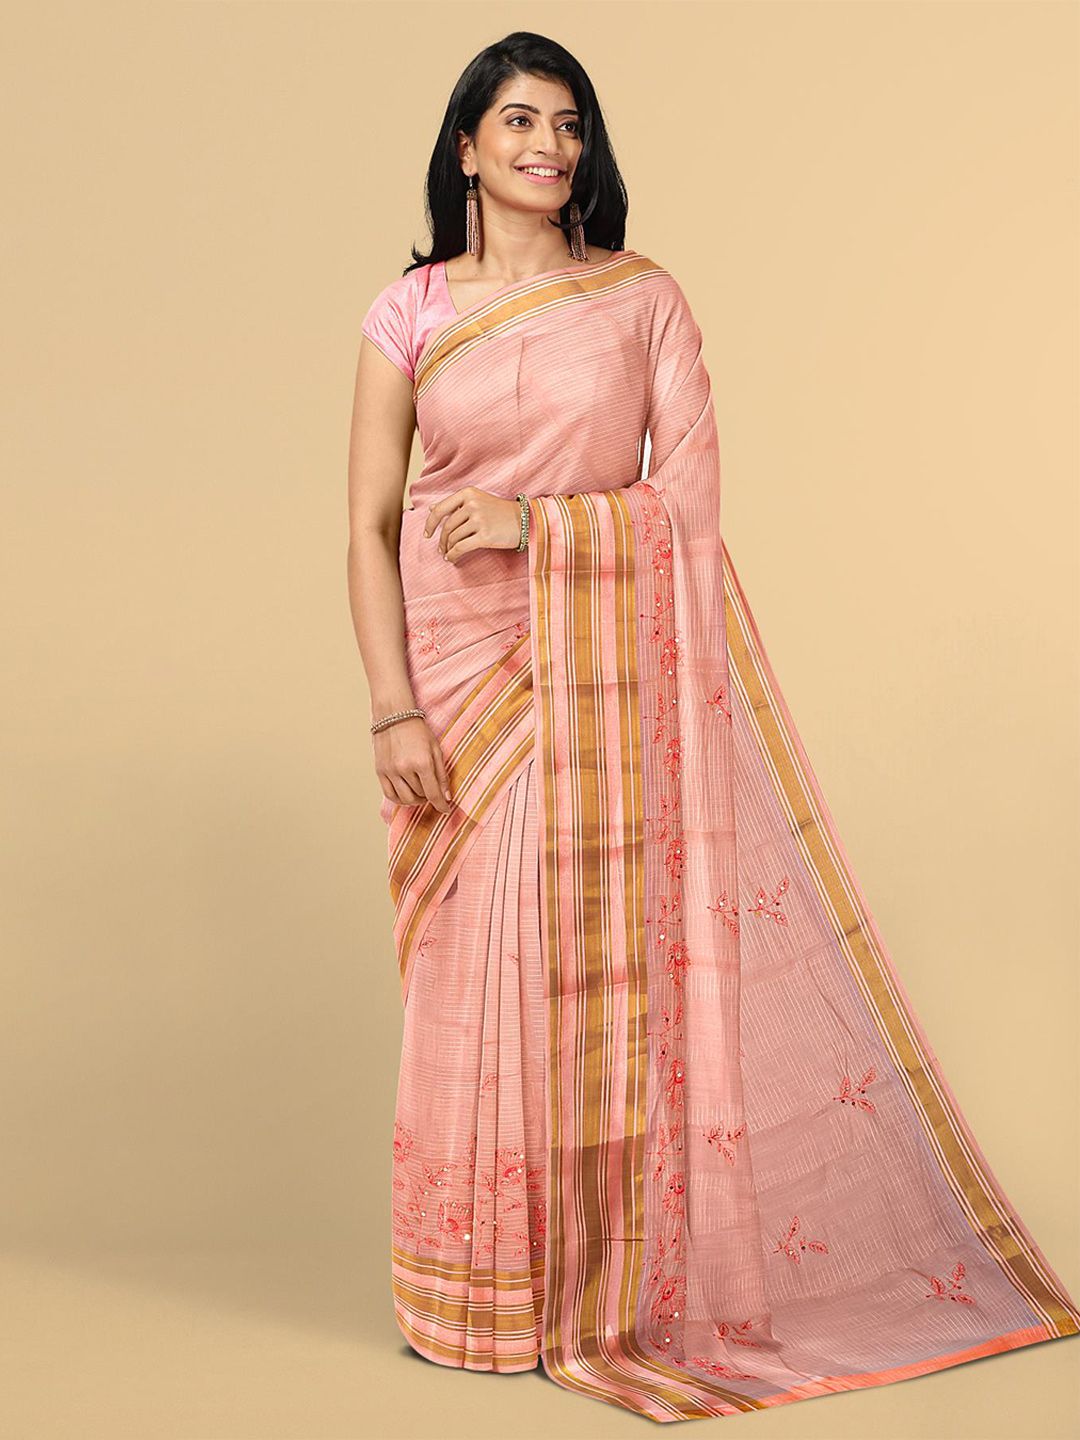 Kalamandir Peach-Coloured & Gold-Toned Floral Silk Blend Saree Price in India